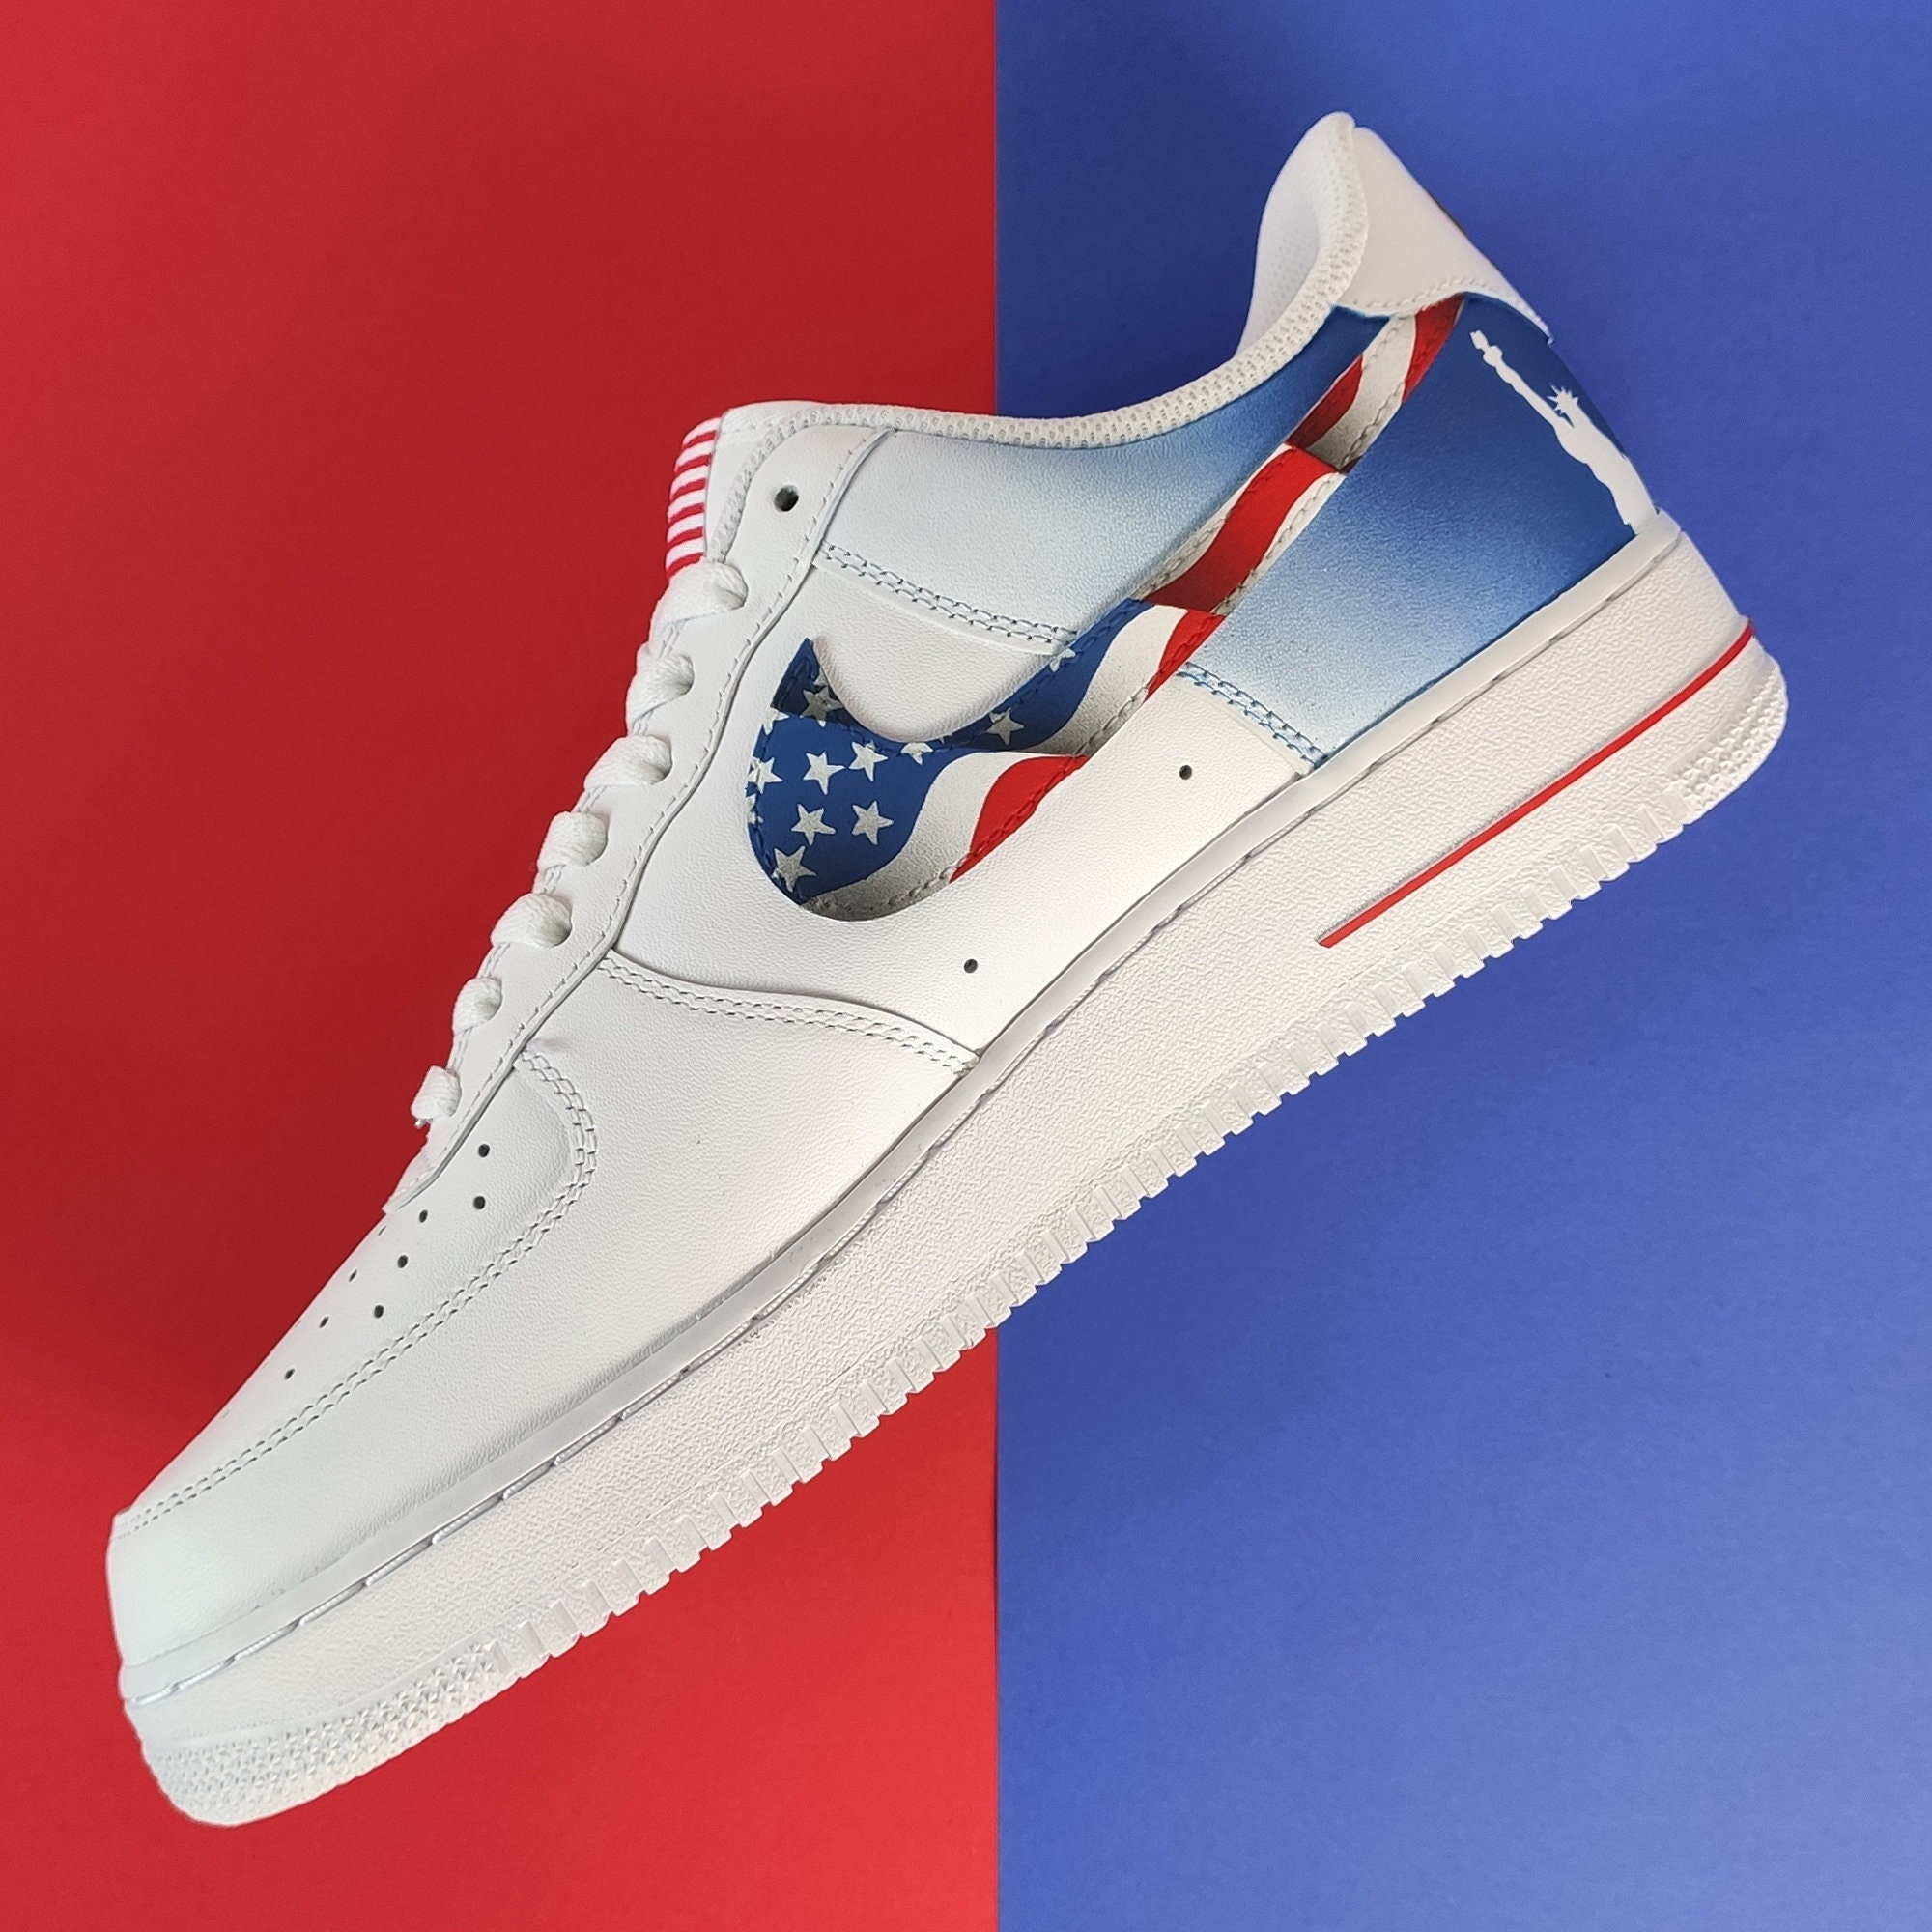 Vespa Custom Name Air Force Shoes Sport Sneakers For Men Women -  Freedomdesign